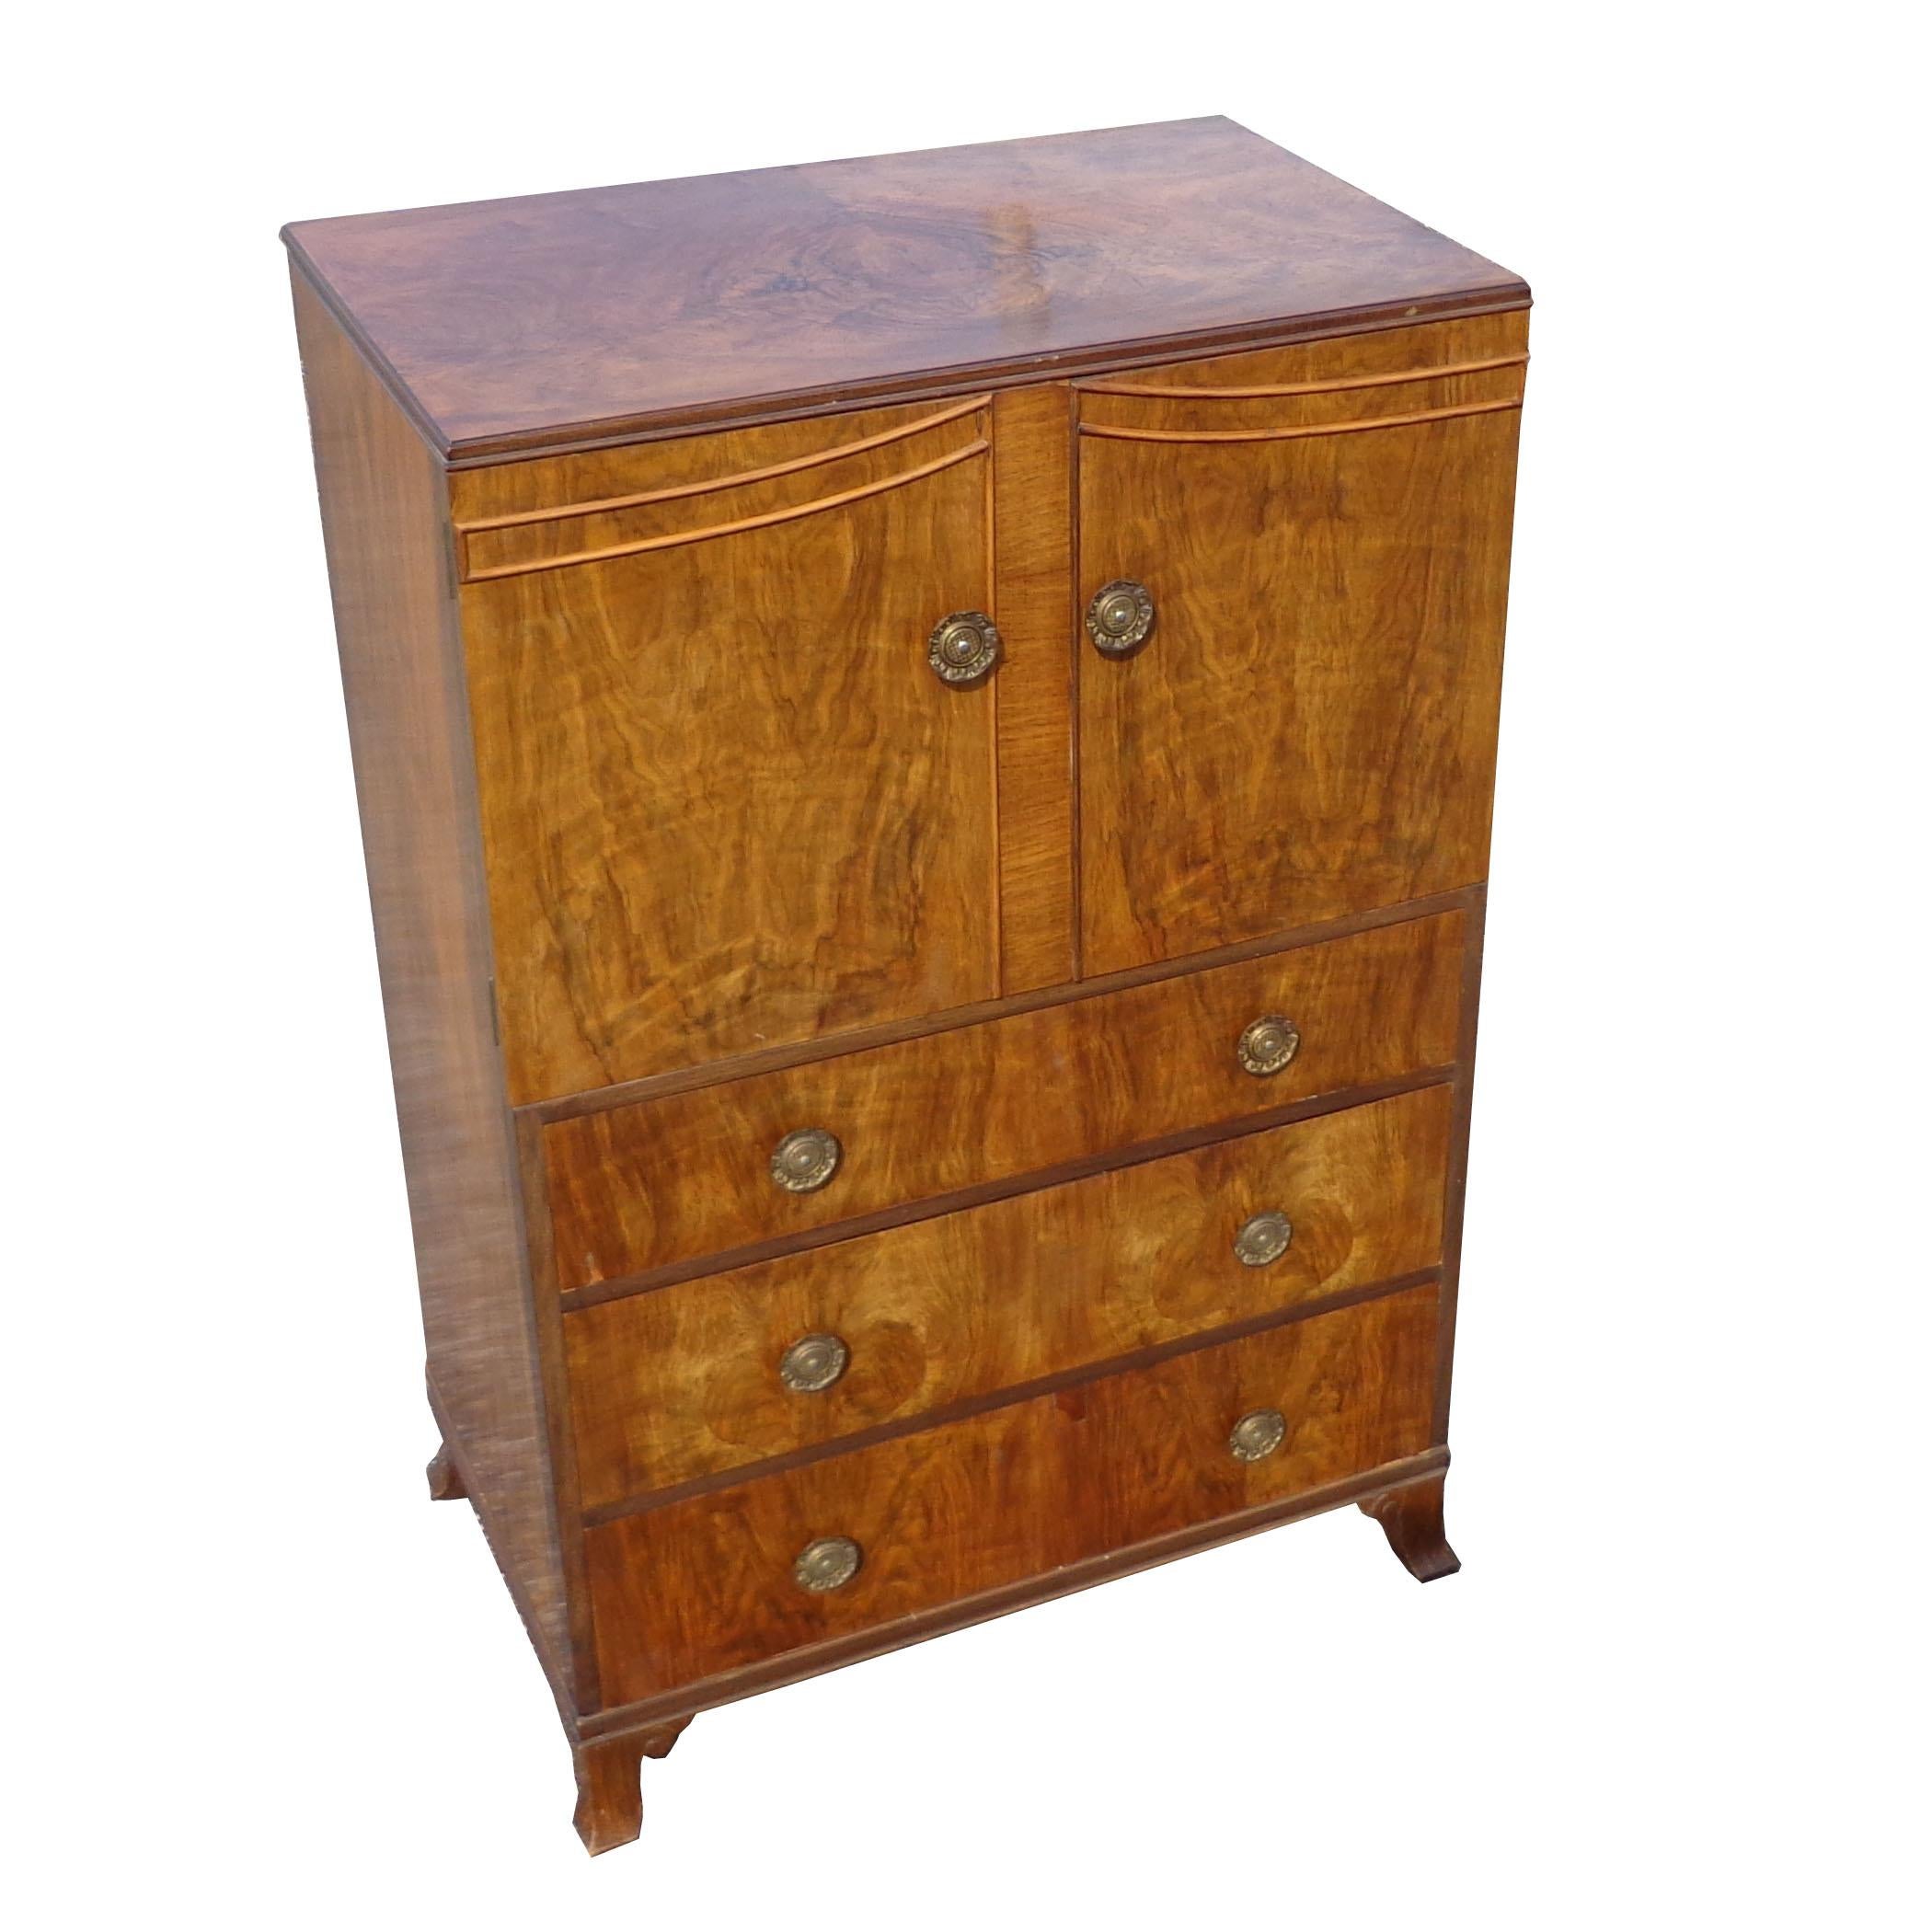 Antique walnut burl dresser armoire linen cabinet

Rich walnut with 2 door shelves and 3 drawers beneath.
Original brass pulls.

 